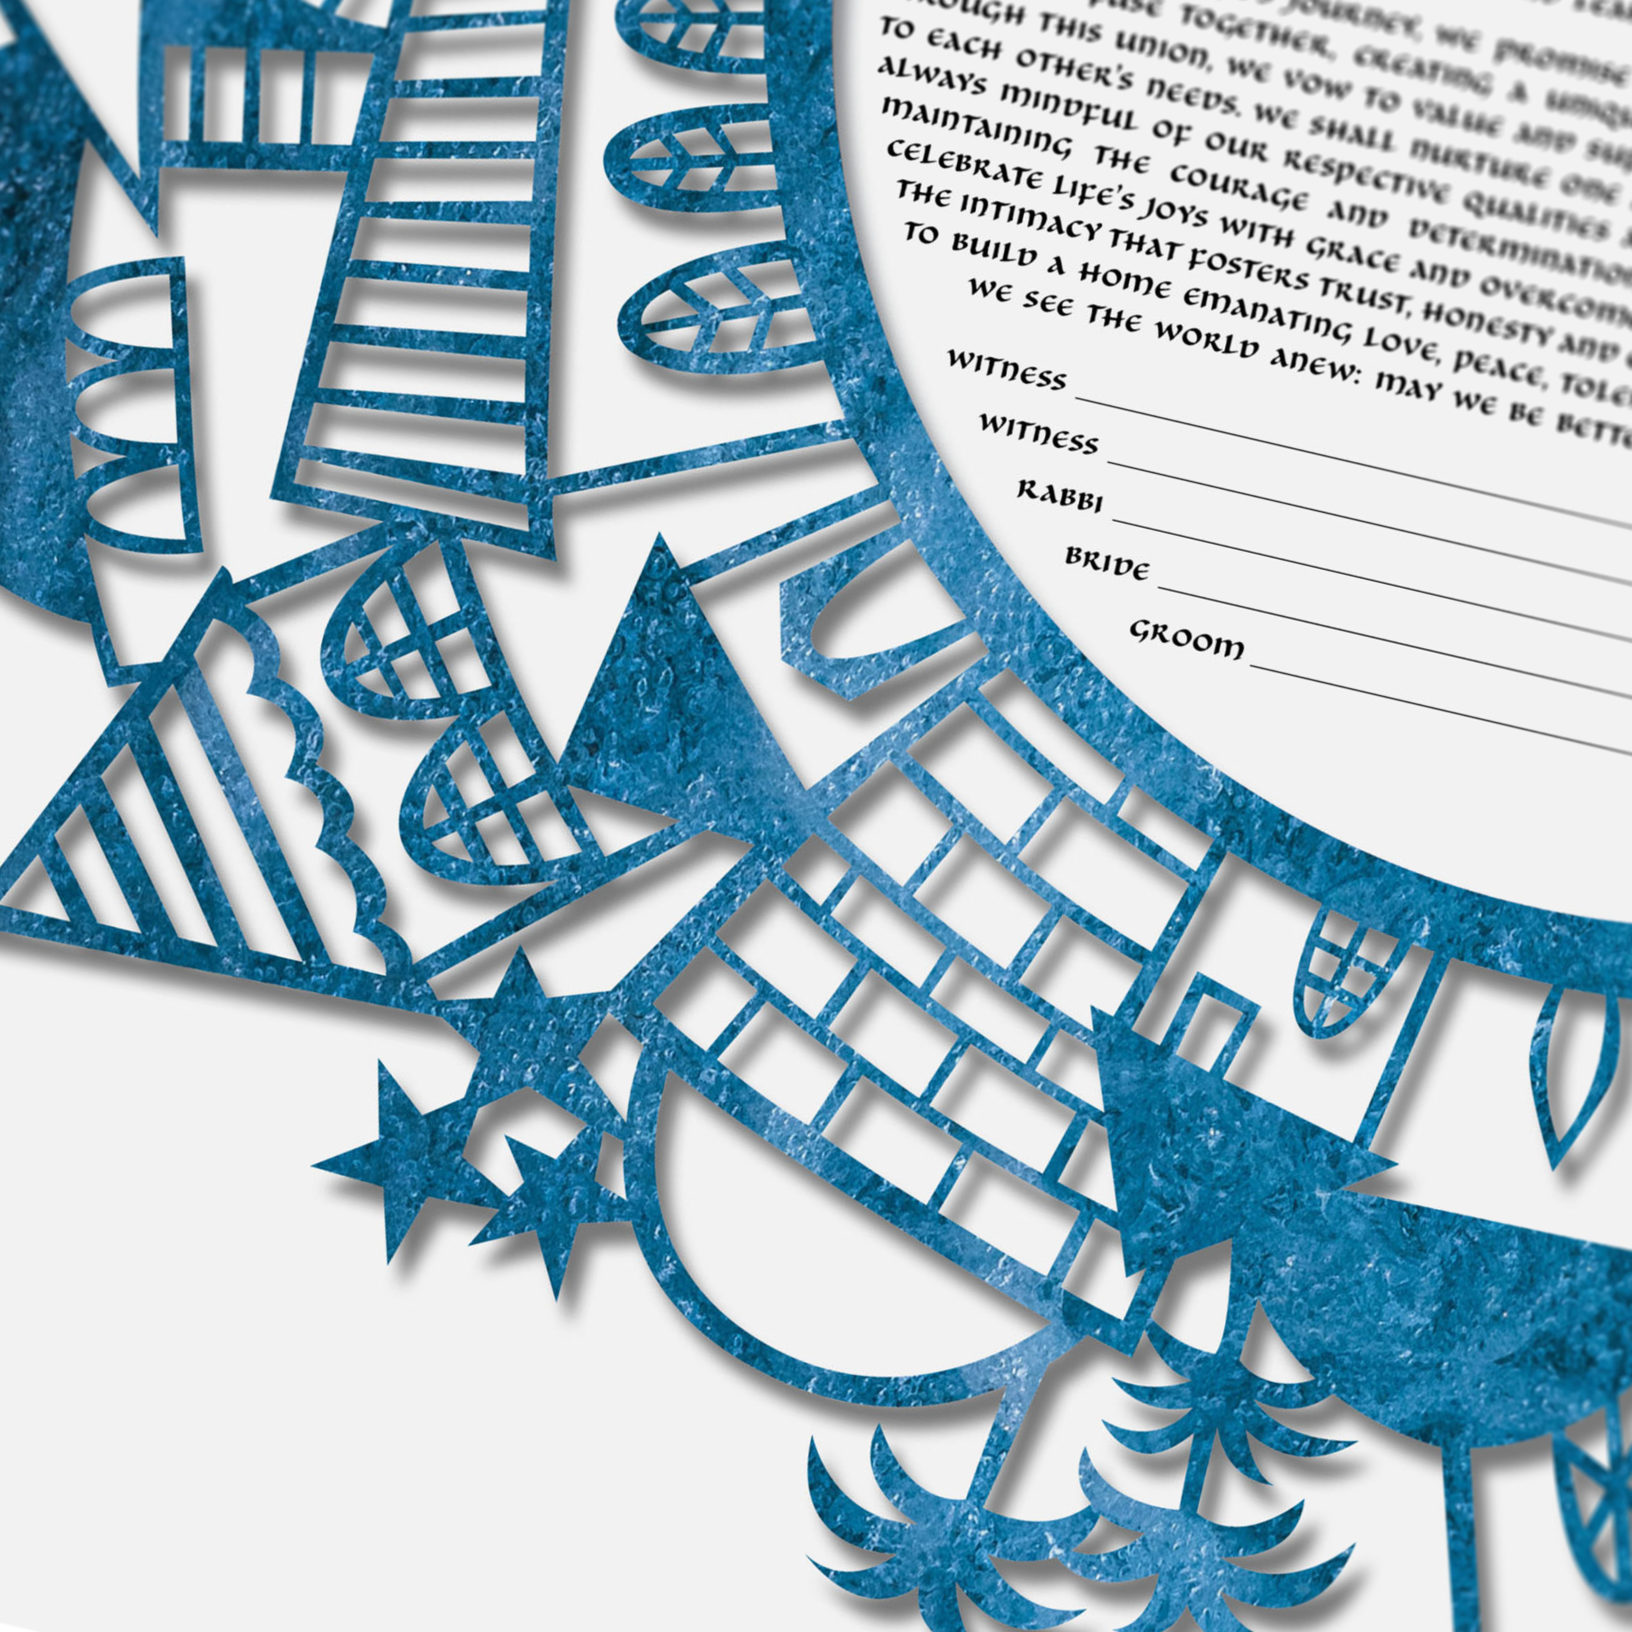 Chavi Feldman Papercut Jerusalem Papercut Blue Mist on White Ketubah Designs